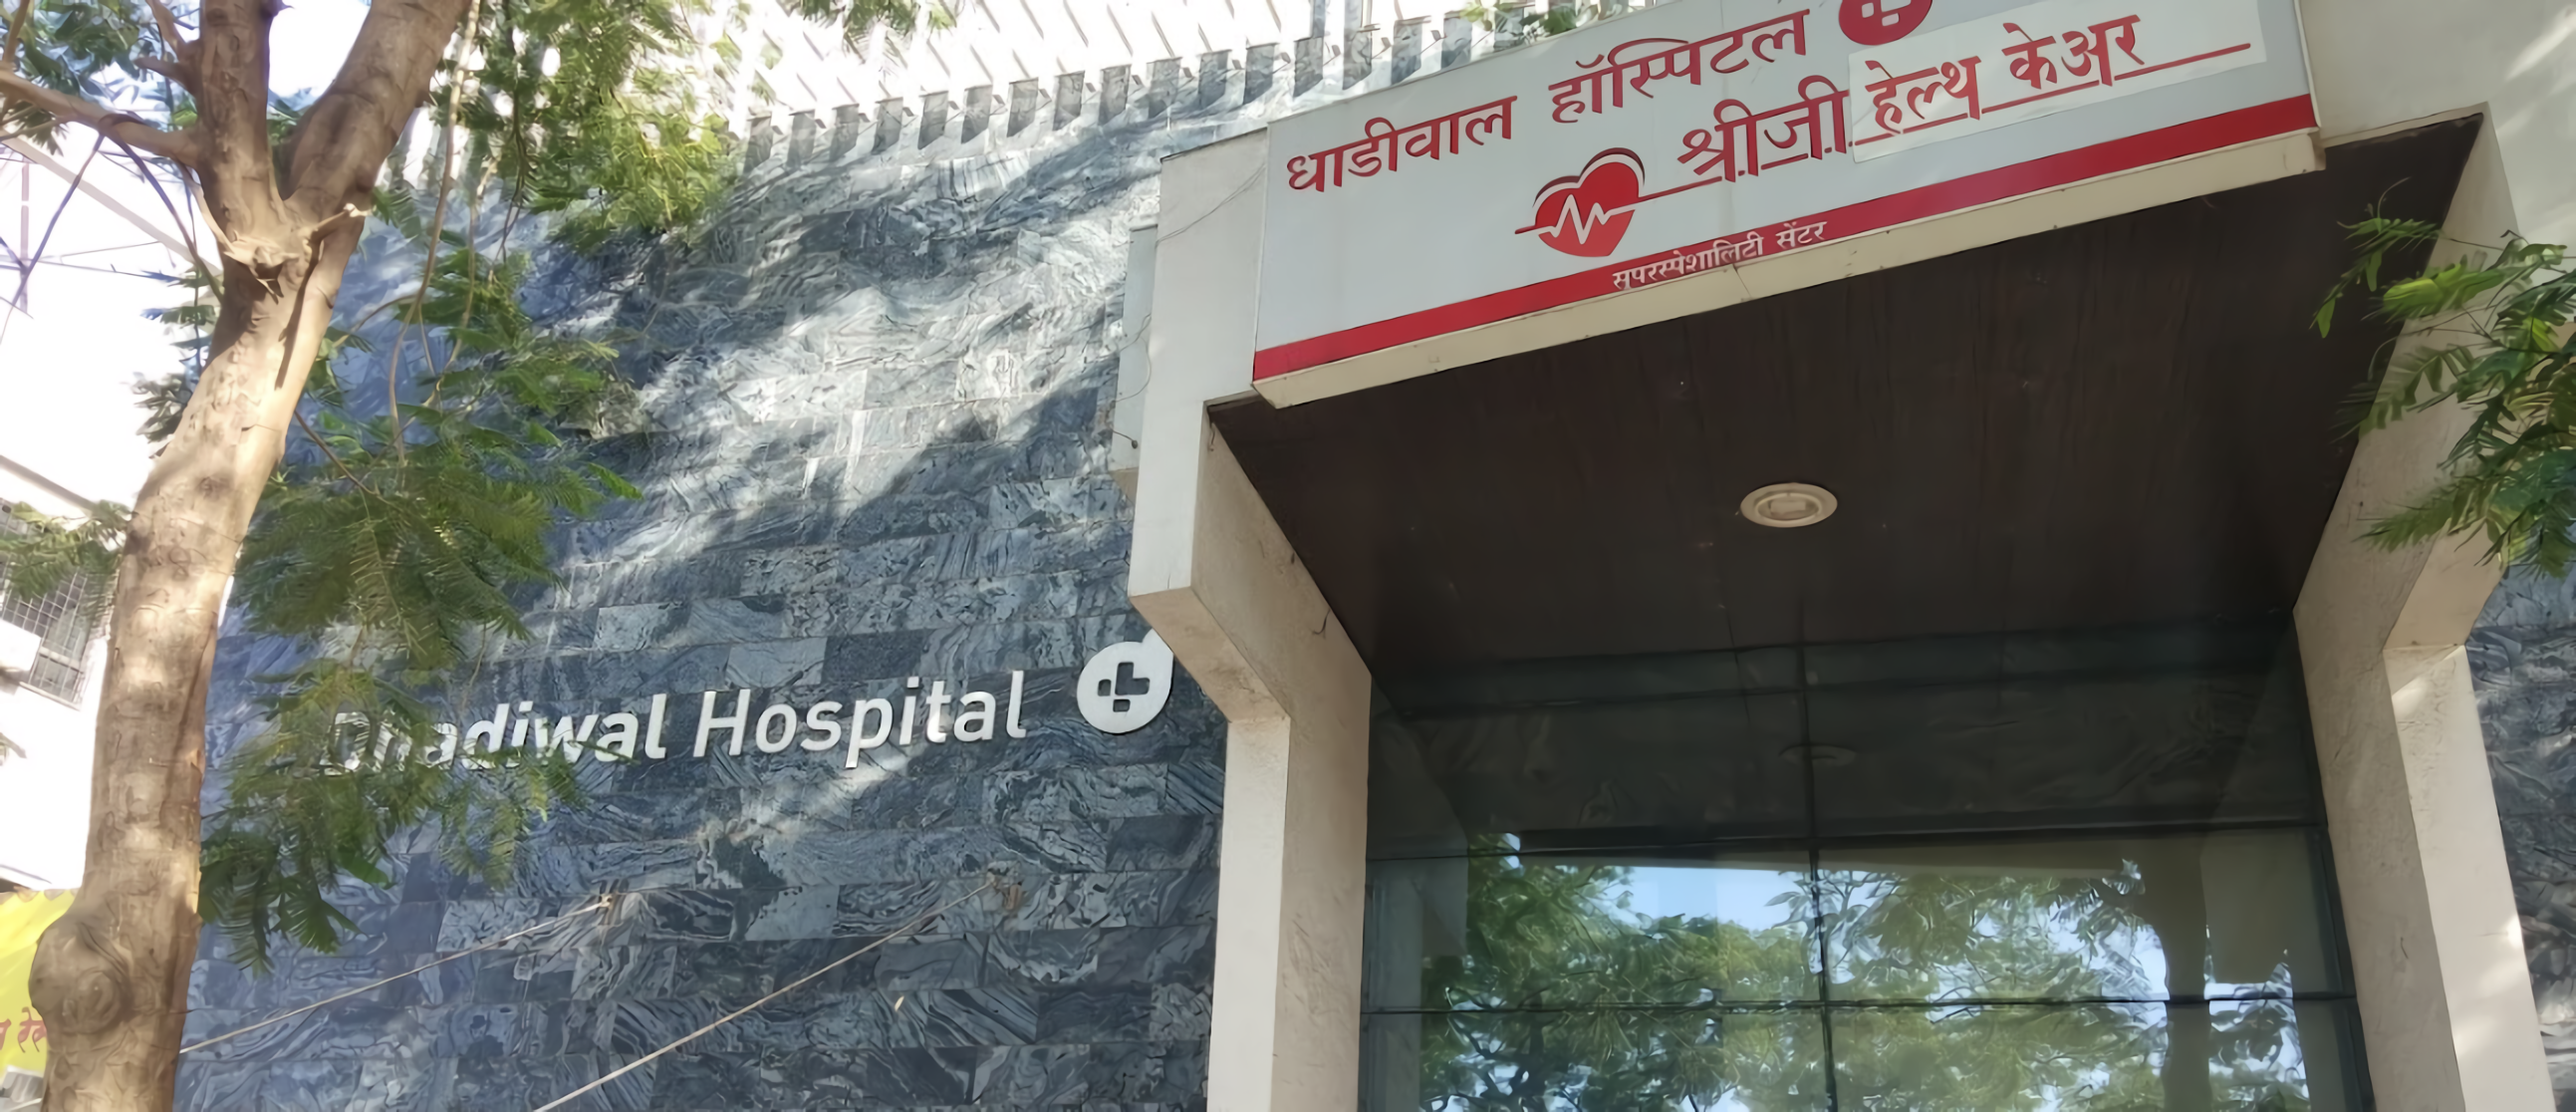 Dhadiwal Hospital